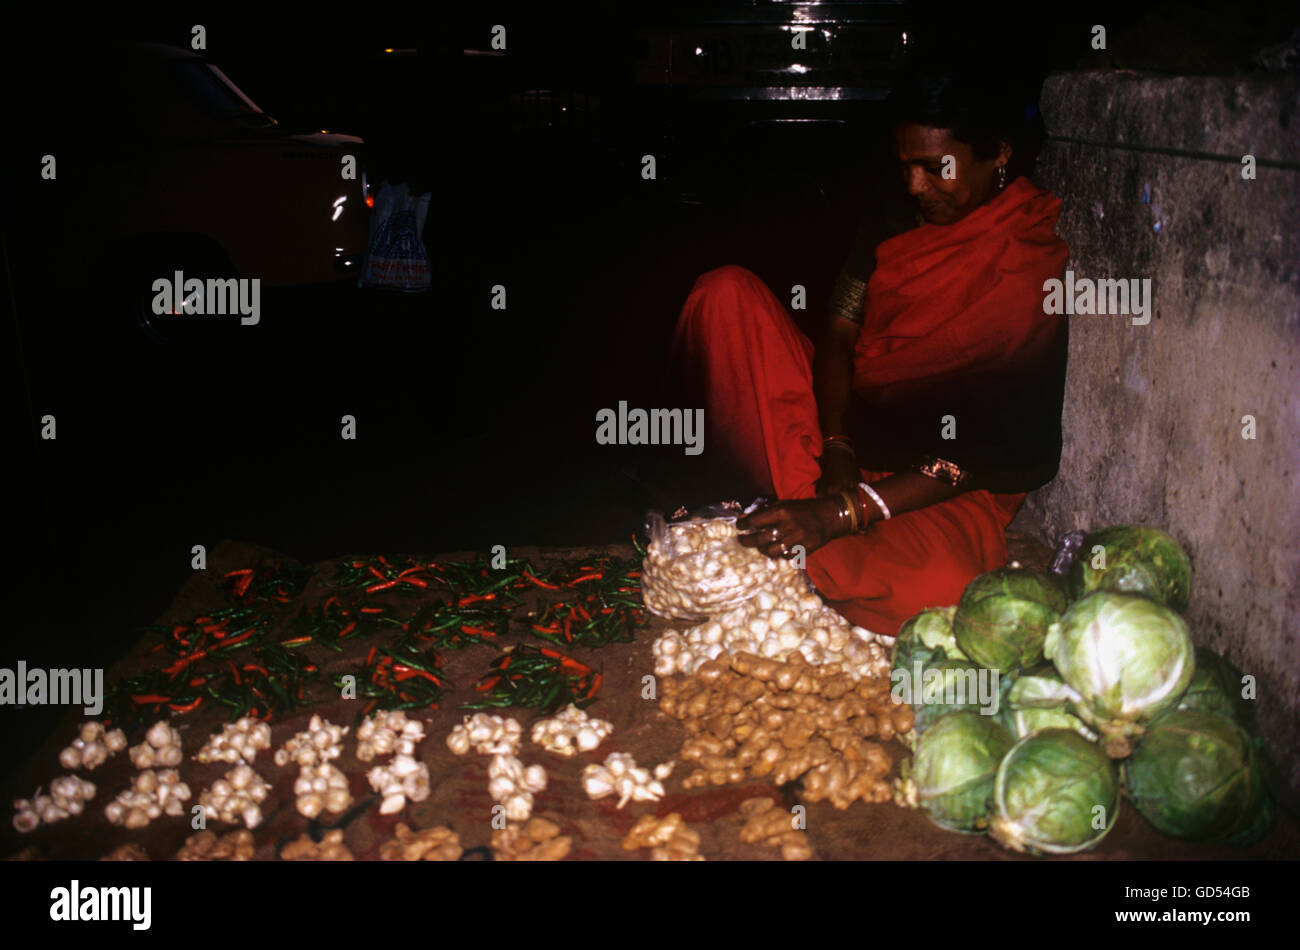 A vegetable seller Stock Photo